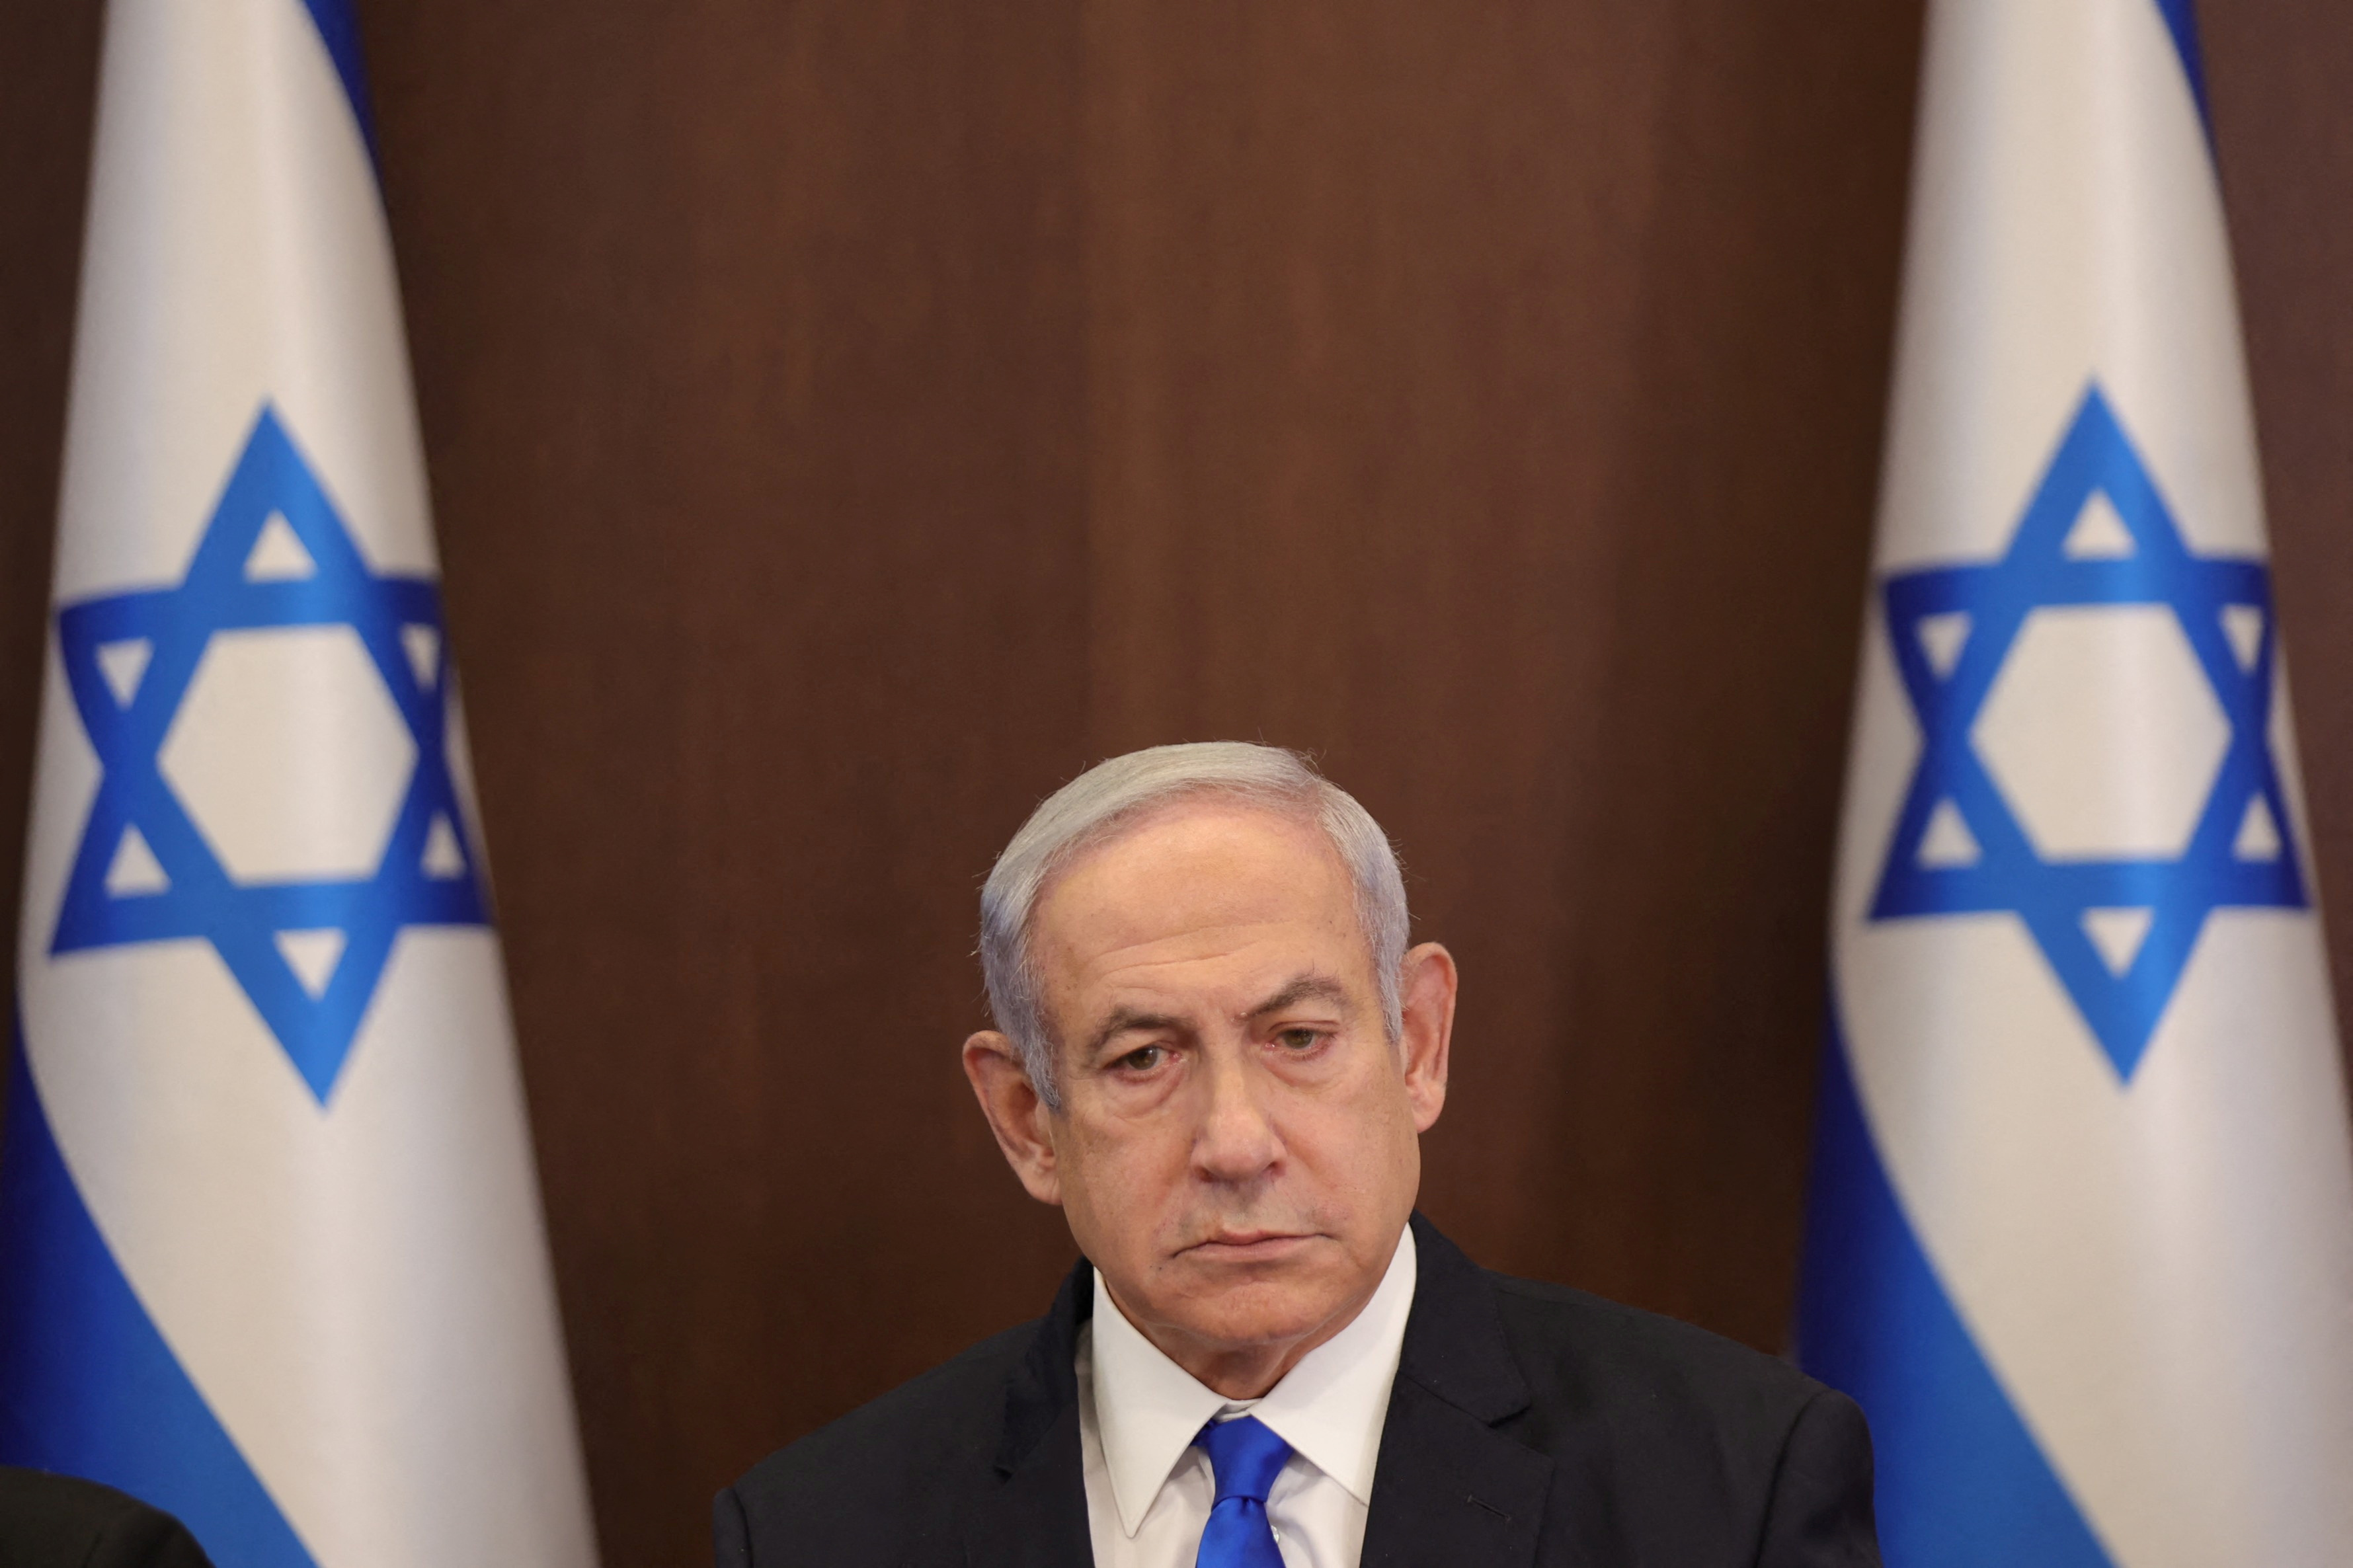 Israeli Prime Minister Benjamin Netanyahu chairs a cabinet meeting in Jerusalem